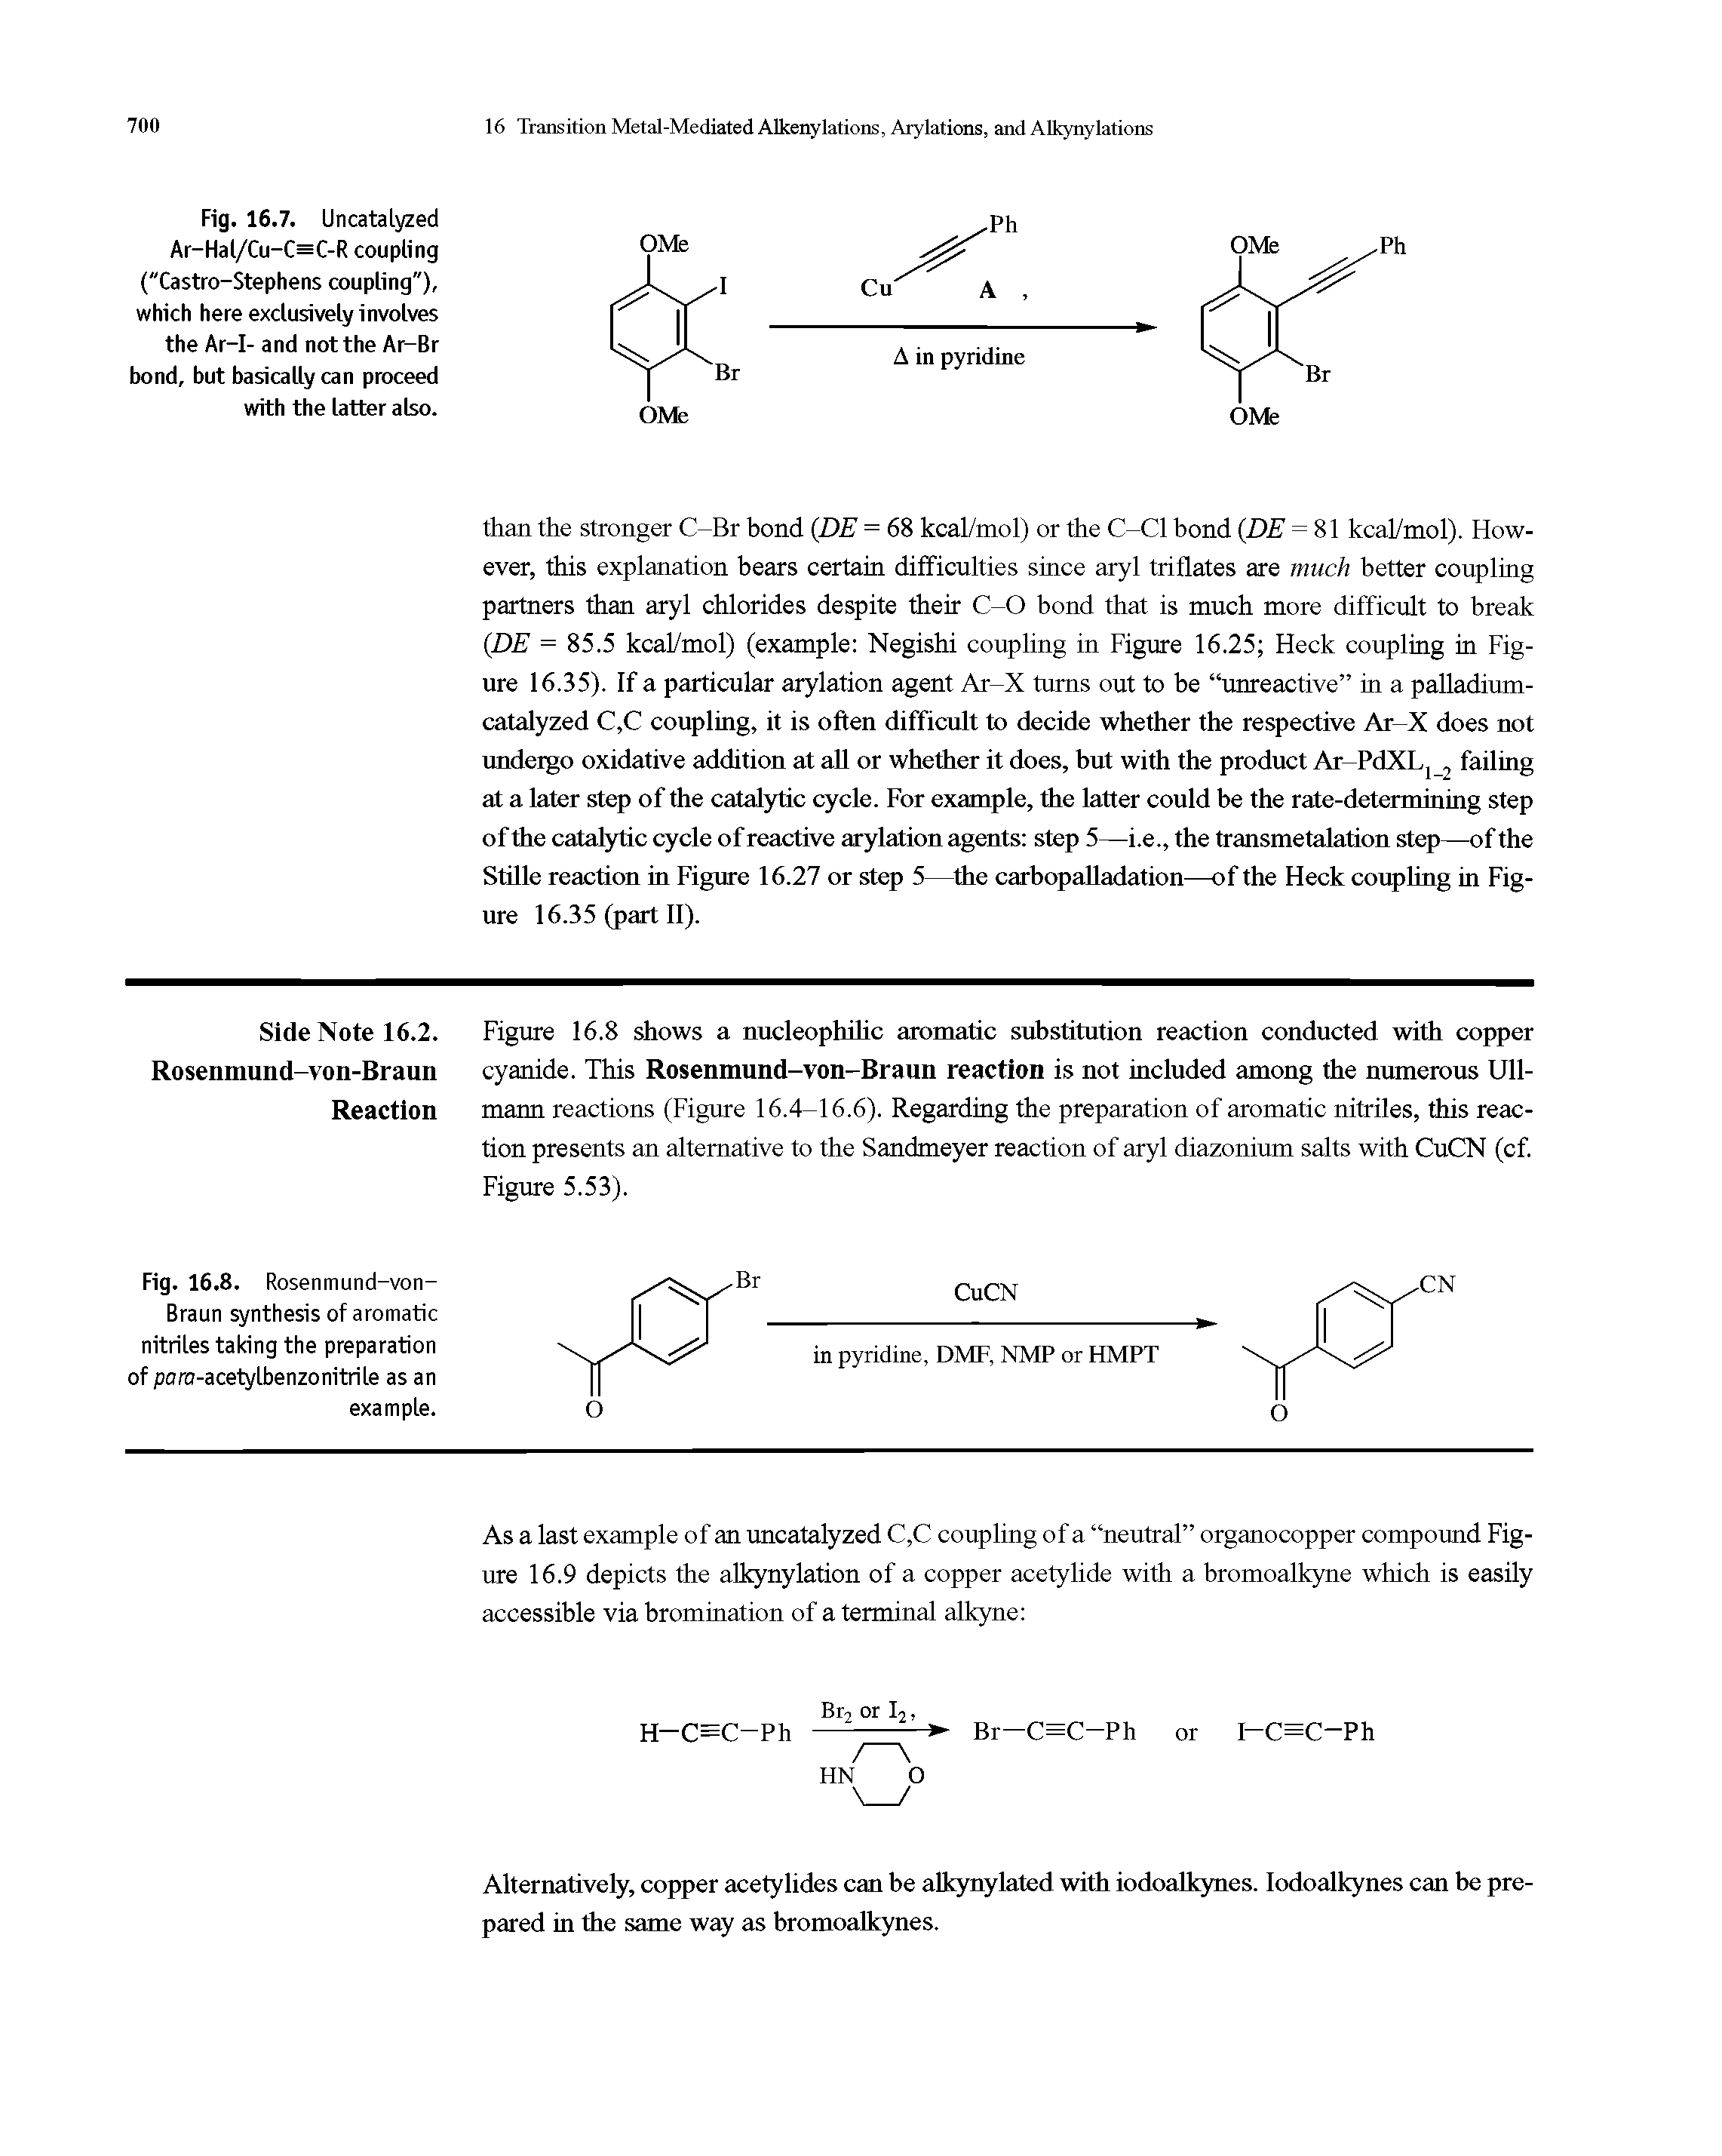 Fig. 16.8. Rosenmund-von-Braun synthesis of aromatic nitriles taking the preparation of pora-acetylbenzonitrile as an example.